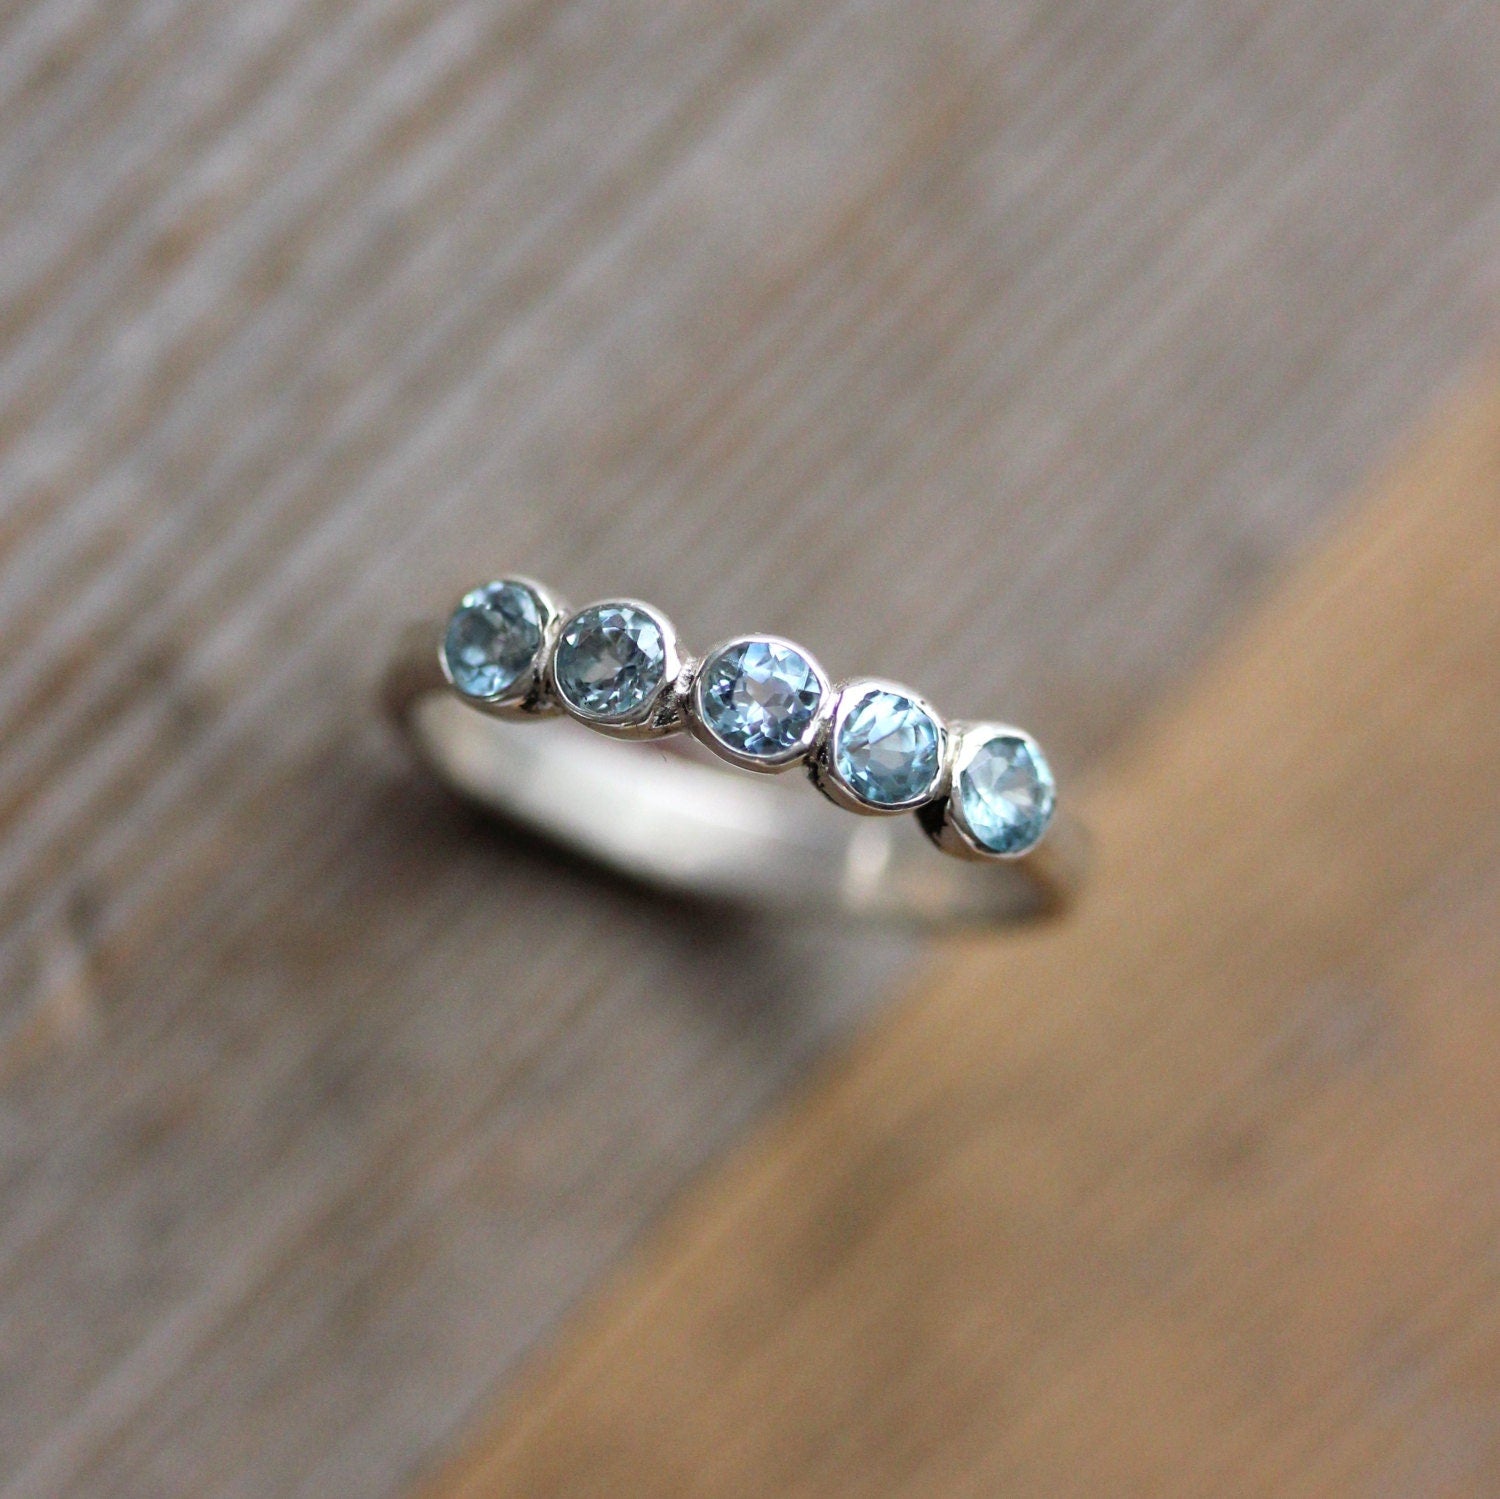 A Cassin Jewelry handmade Sky Blue Topaz Ring with blue topaz stones.